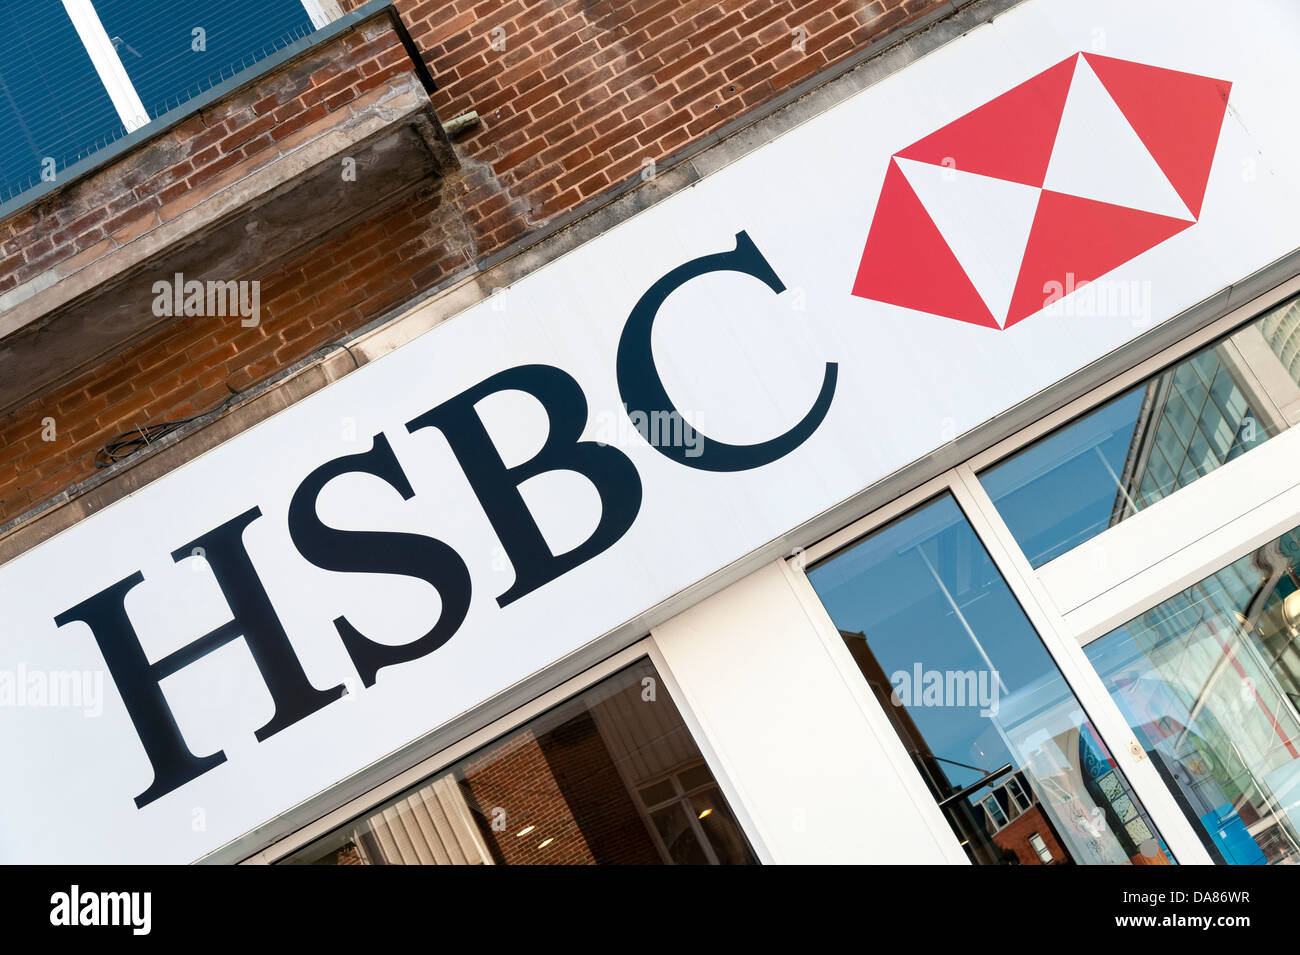 HSBC Bank, Reino Unido. Foto de stock